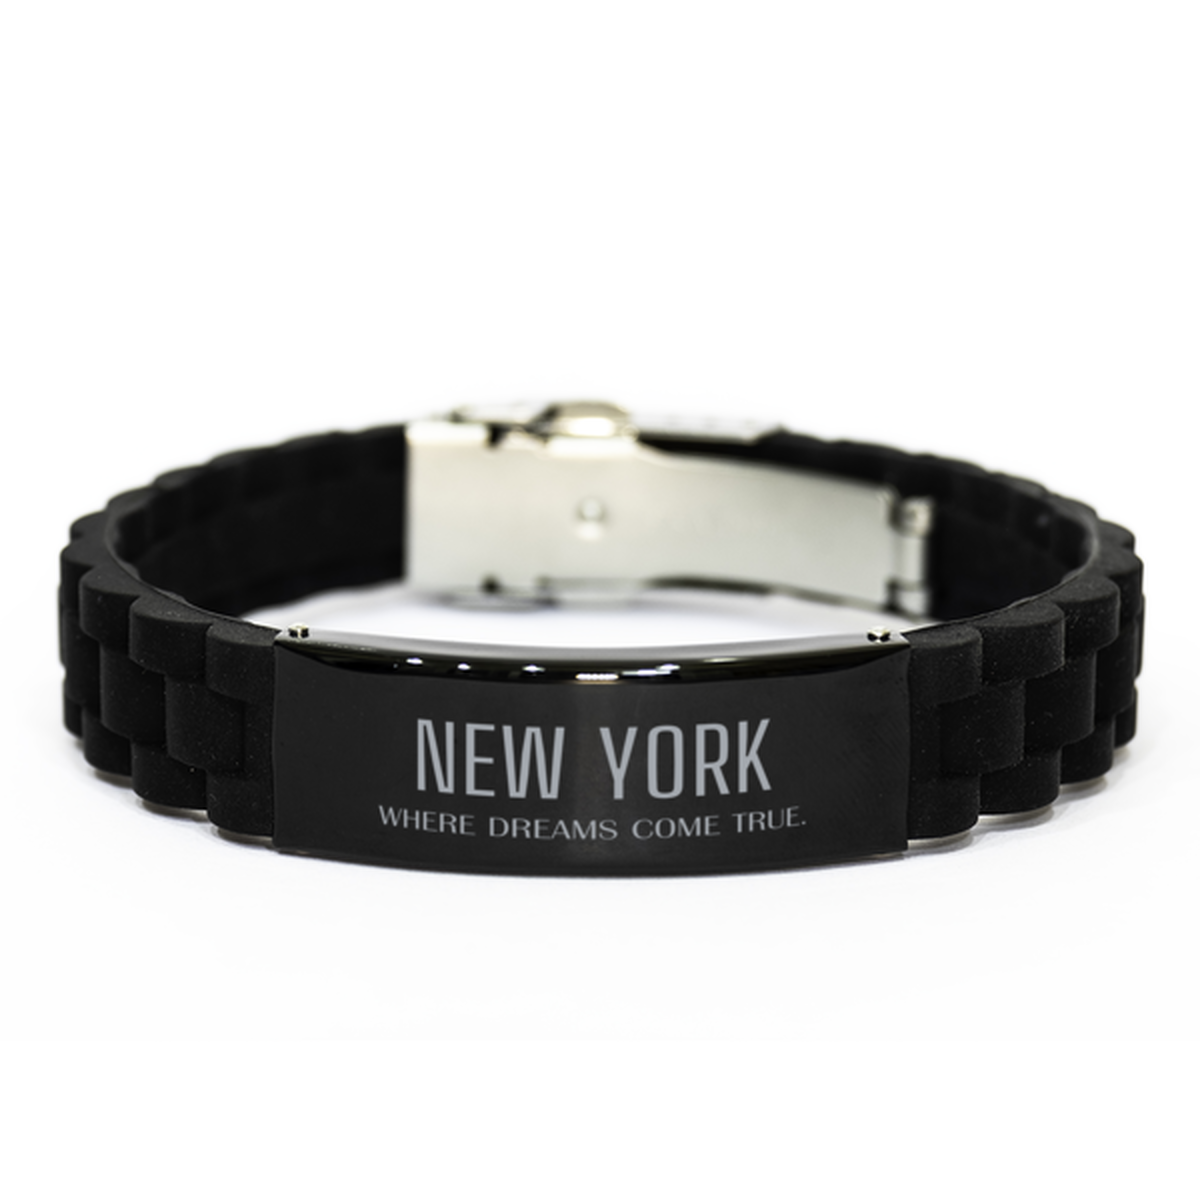 Love New York State Black Glidelock Clasp Bracelet, New York Where dreams come true, Birthday Inspirational Gifts For New York Men, Women, Friends